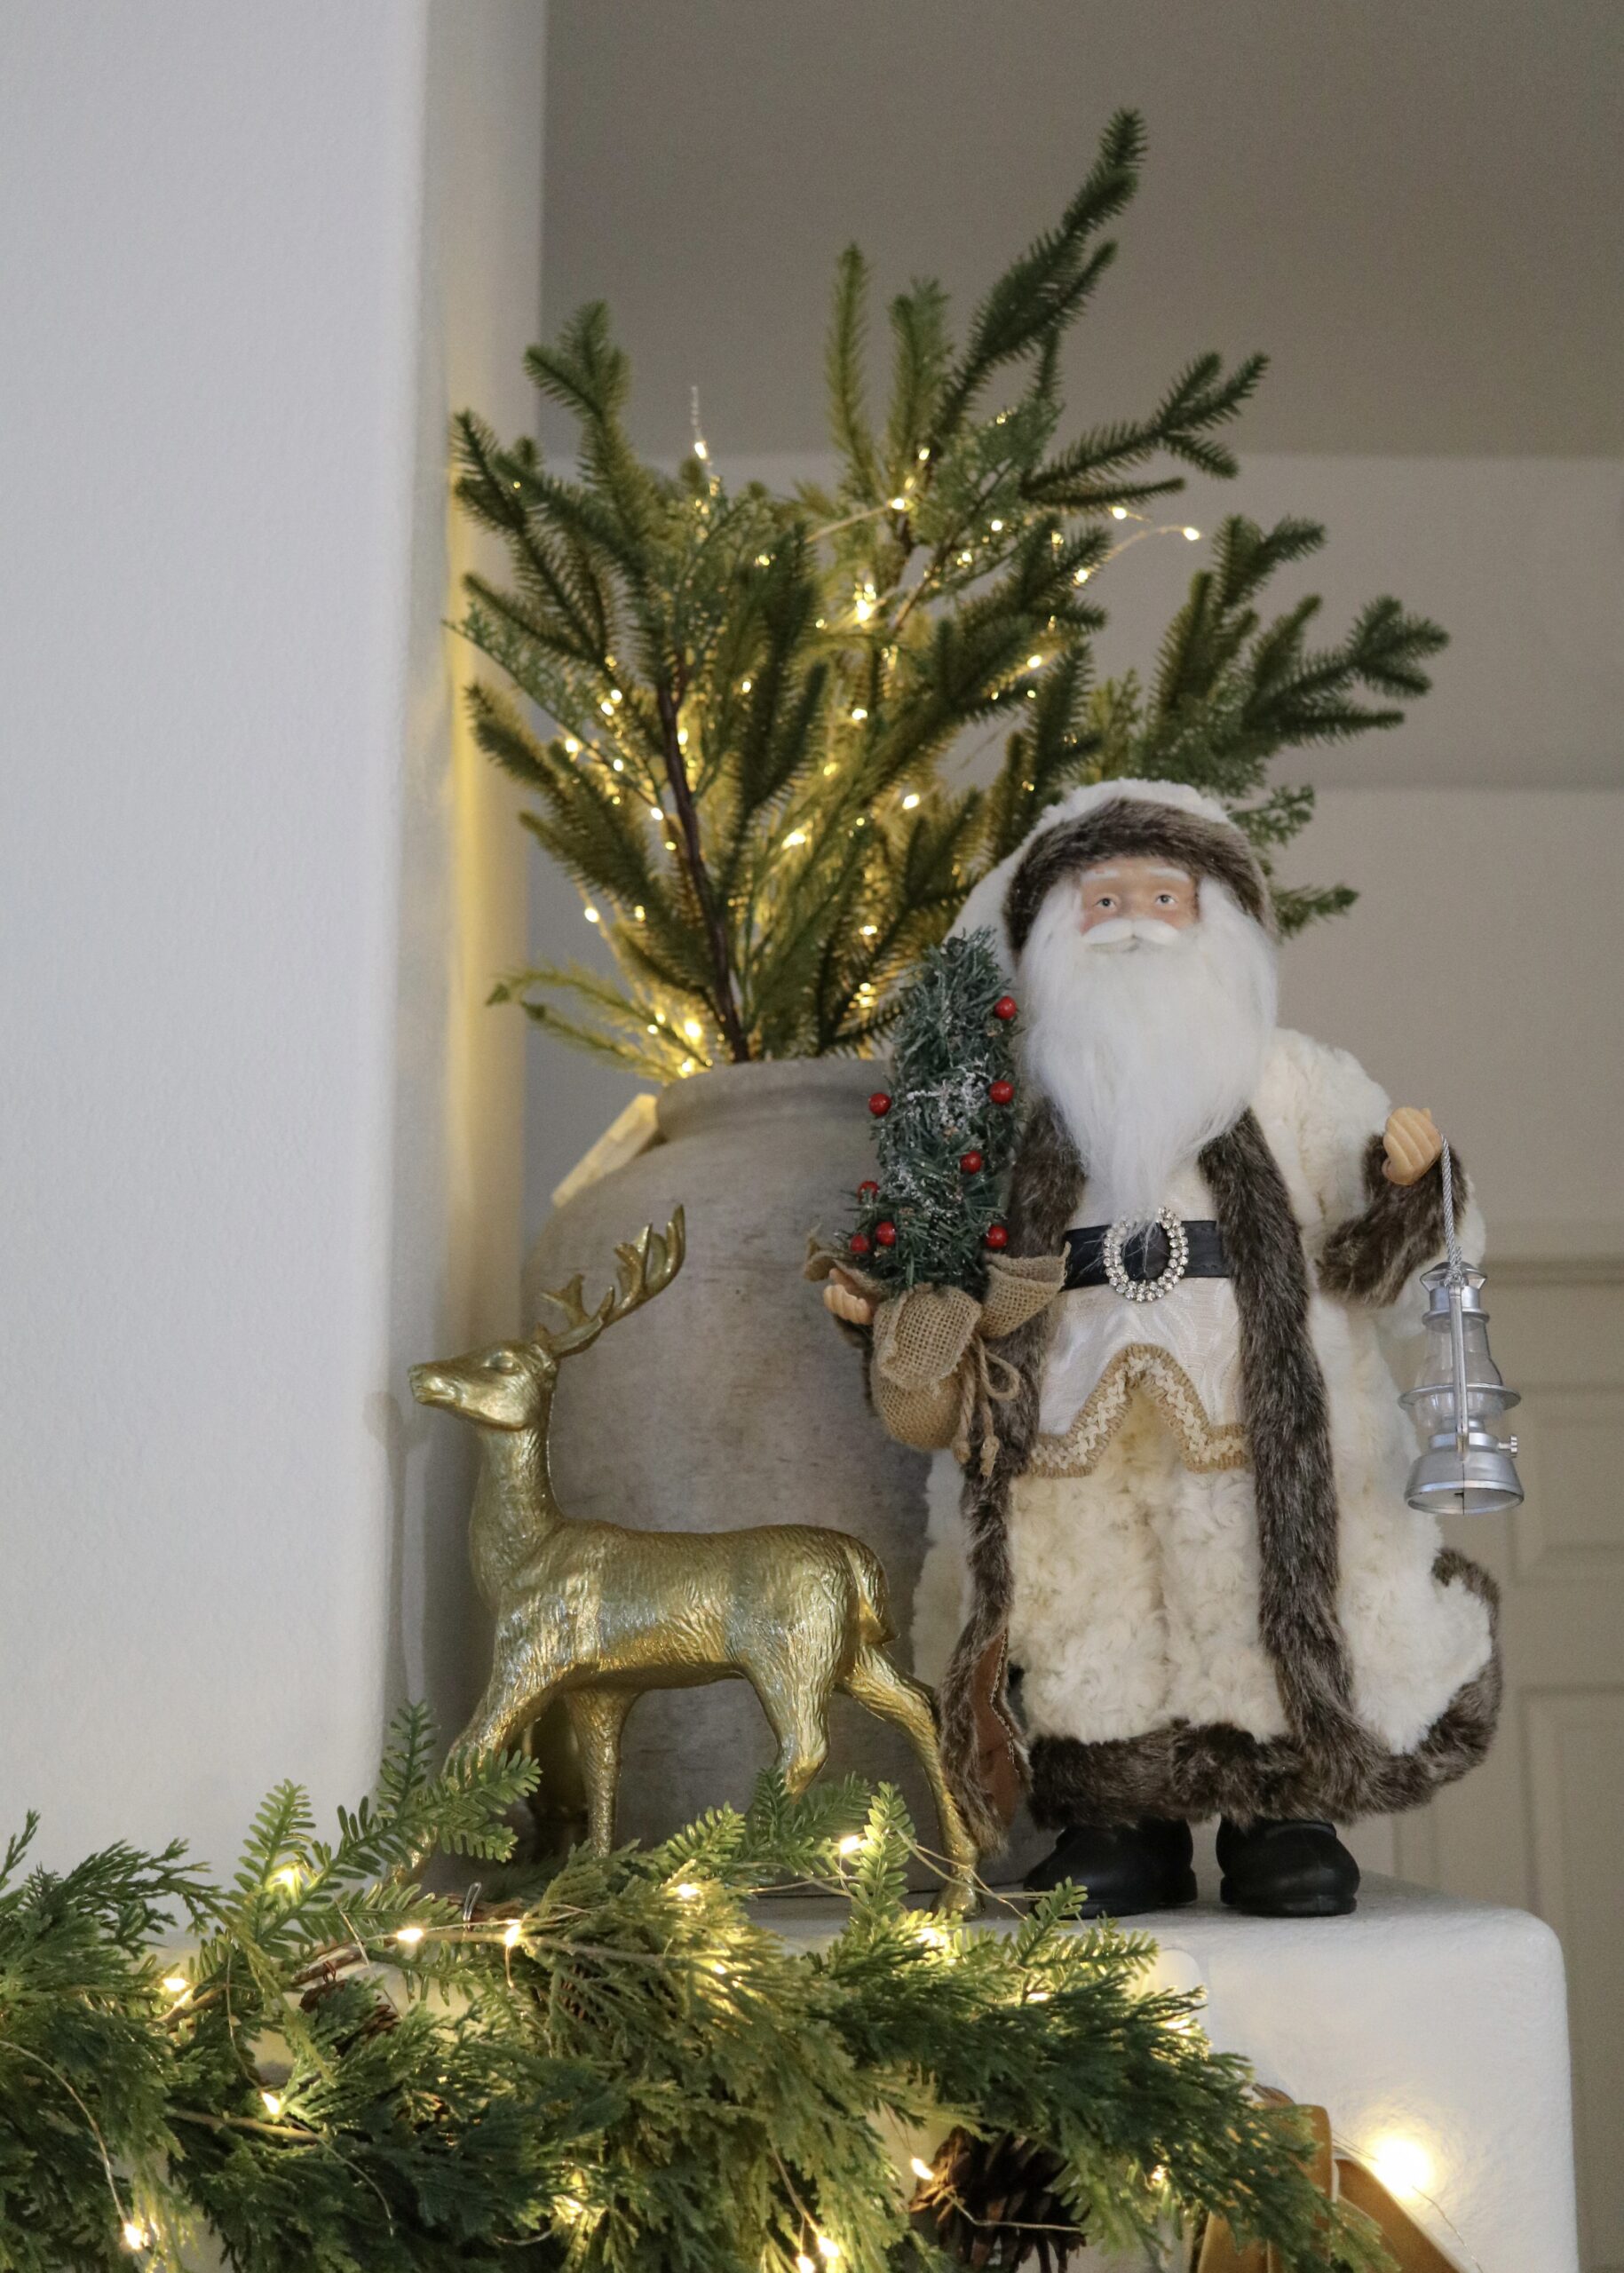 estive decor santa figurine, gold reindeer decorative figurine, pine branches in vase for holiday decor